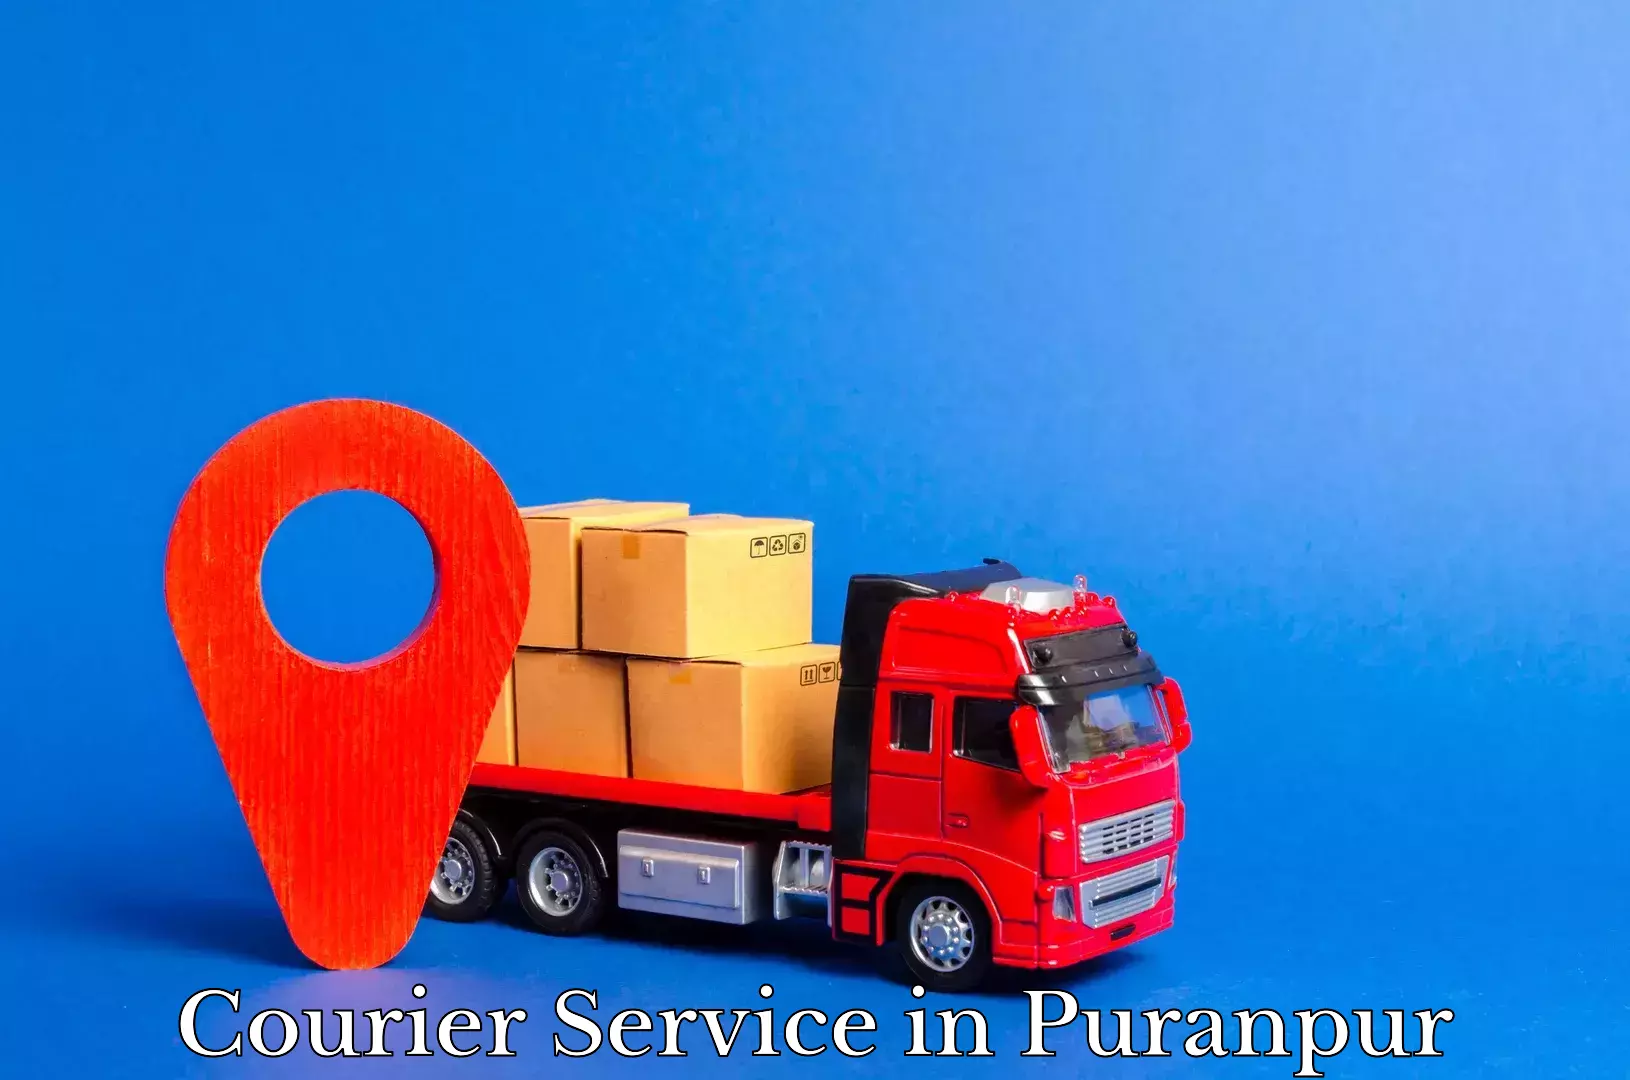 International parcel service in Puranpur